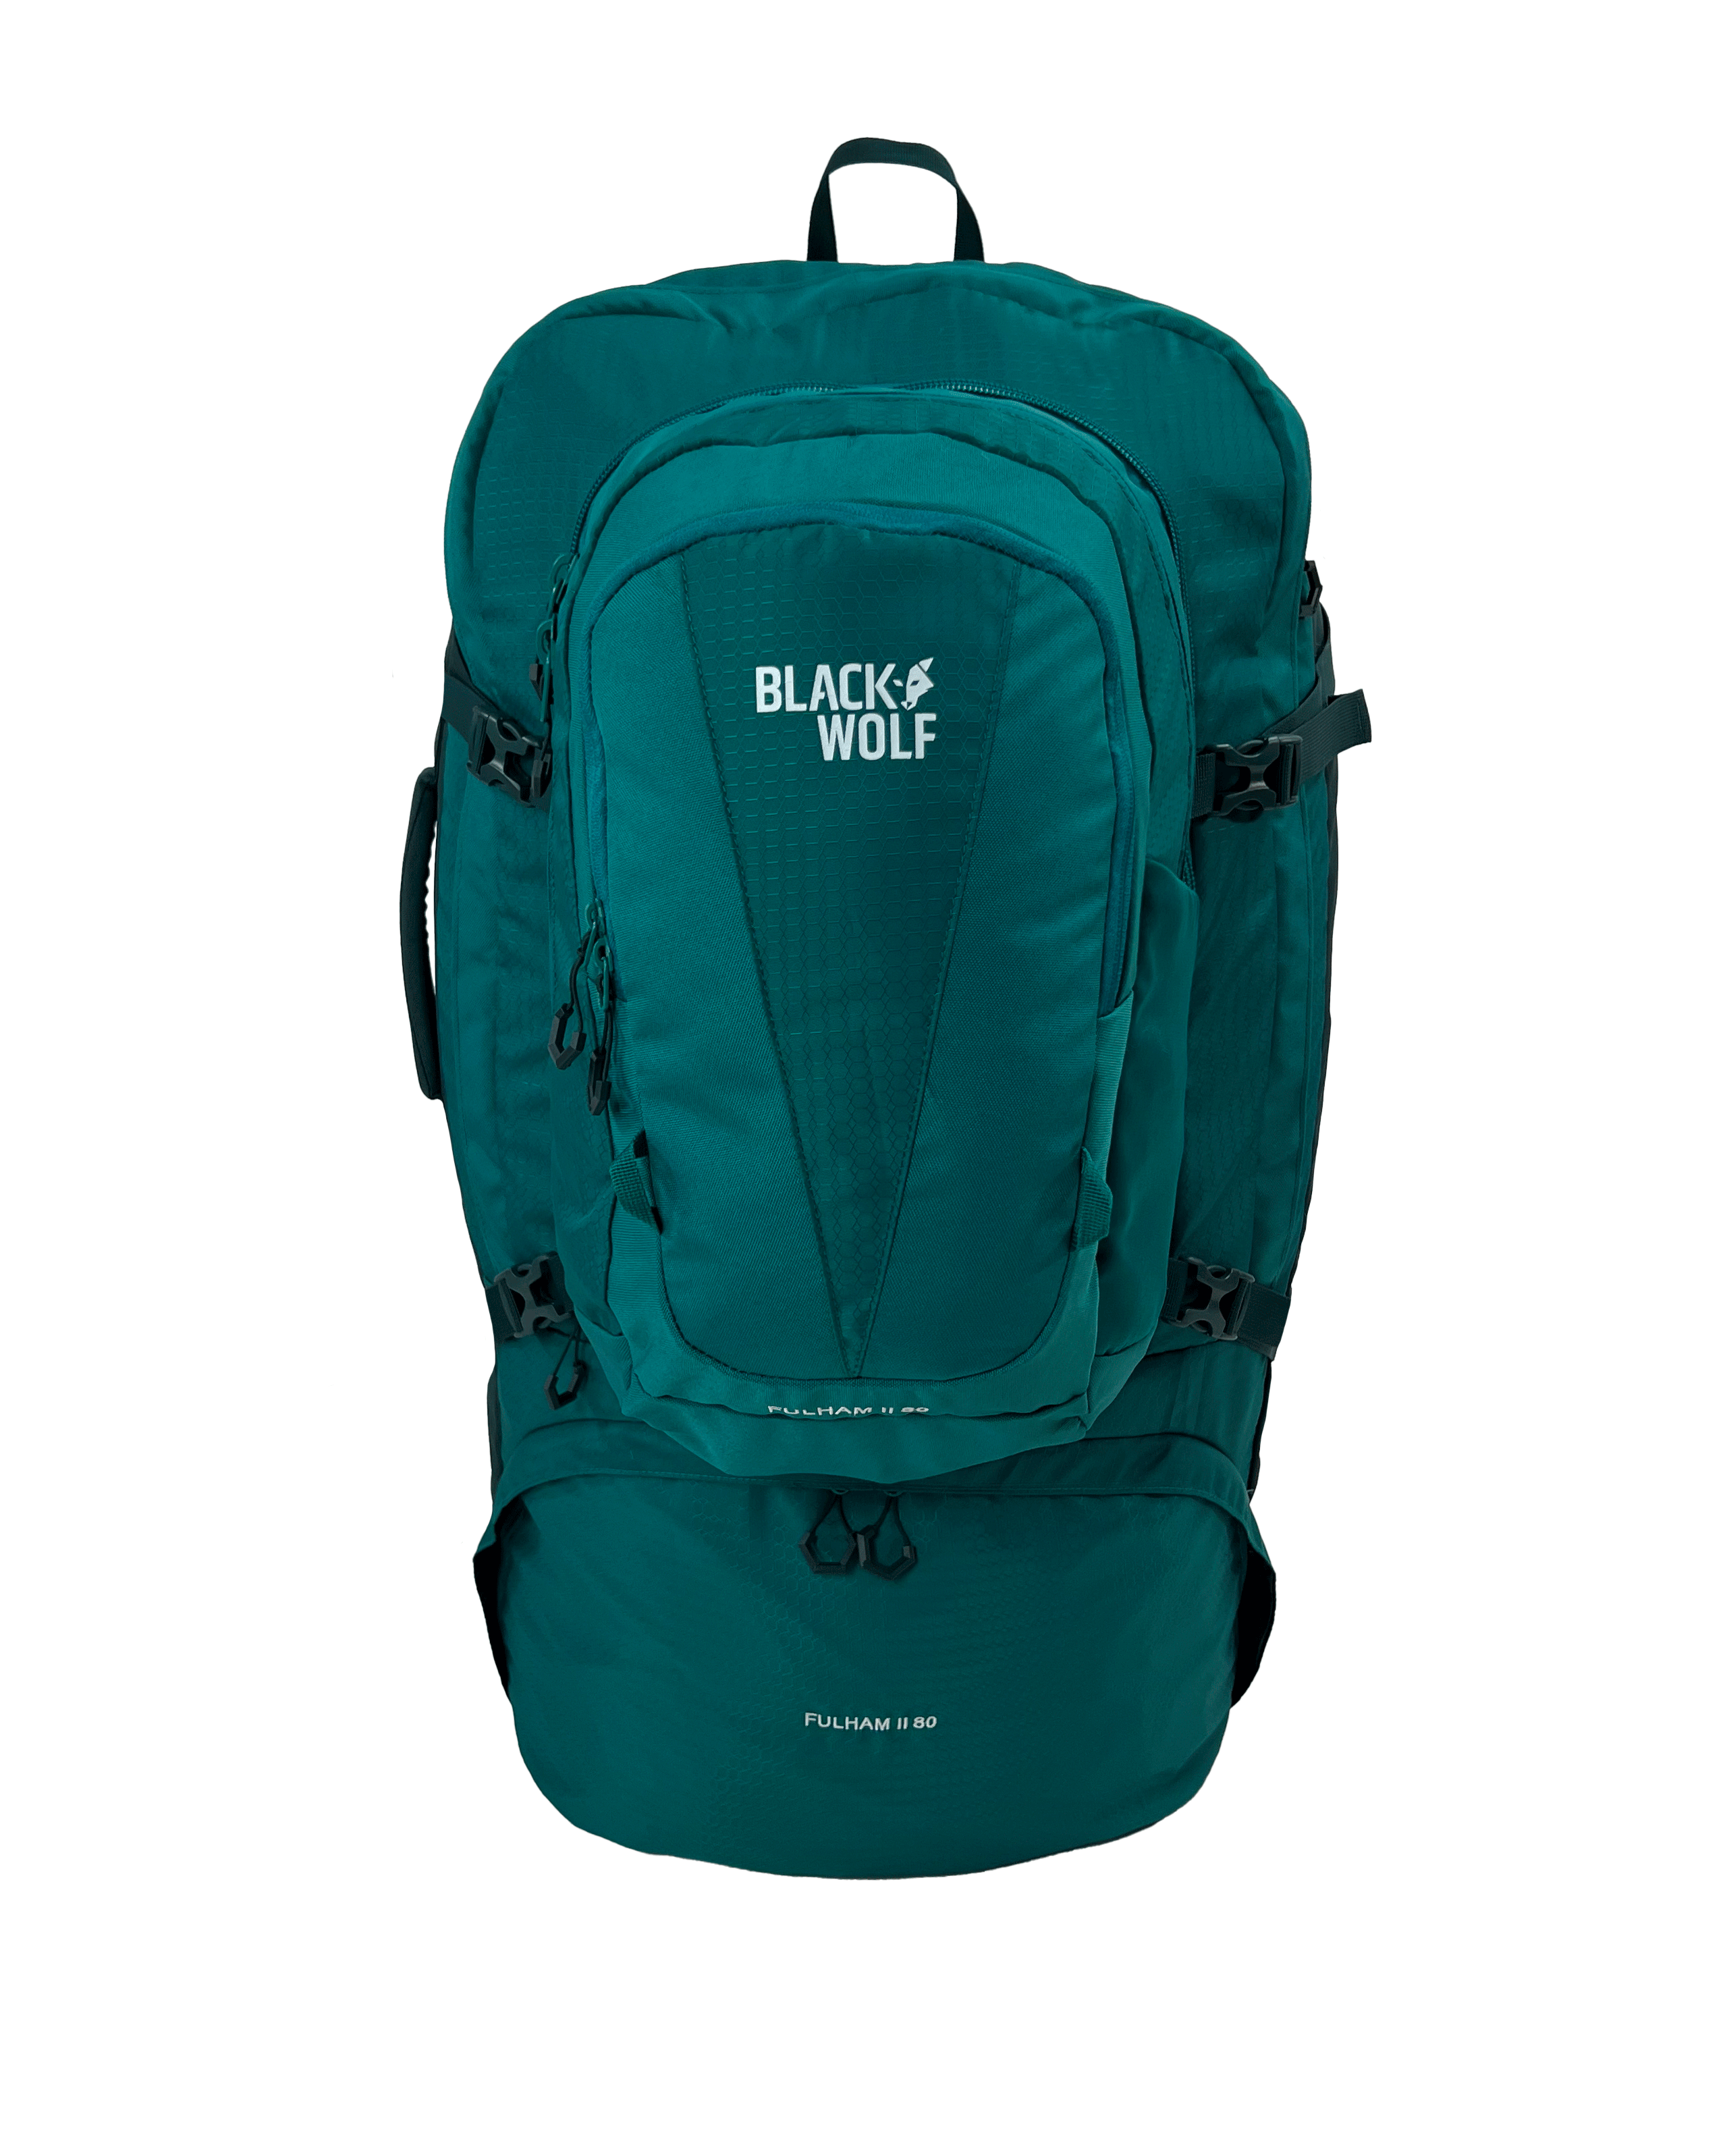 Black Wolf - Fulham II 60 Backpack - Quetzal Green/Sea Moss-2